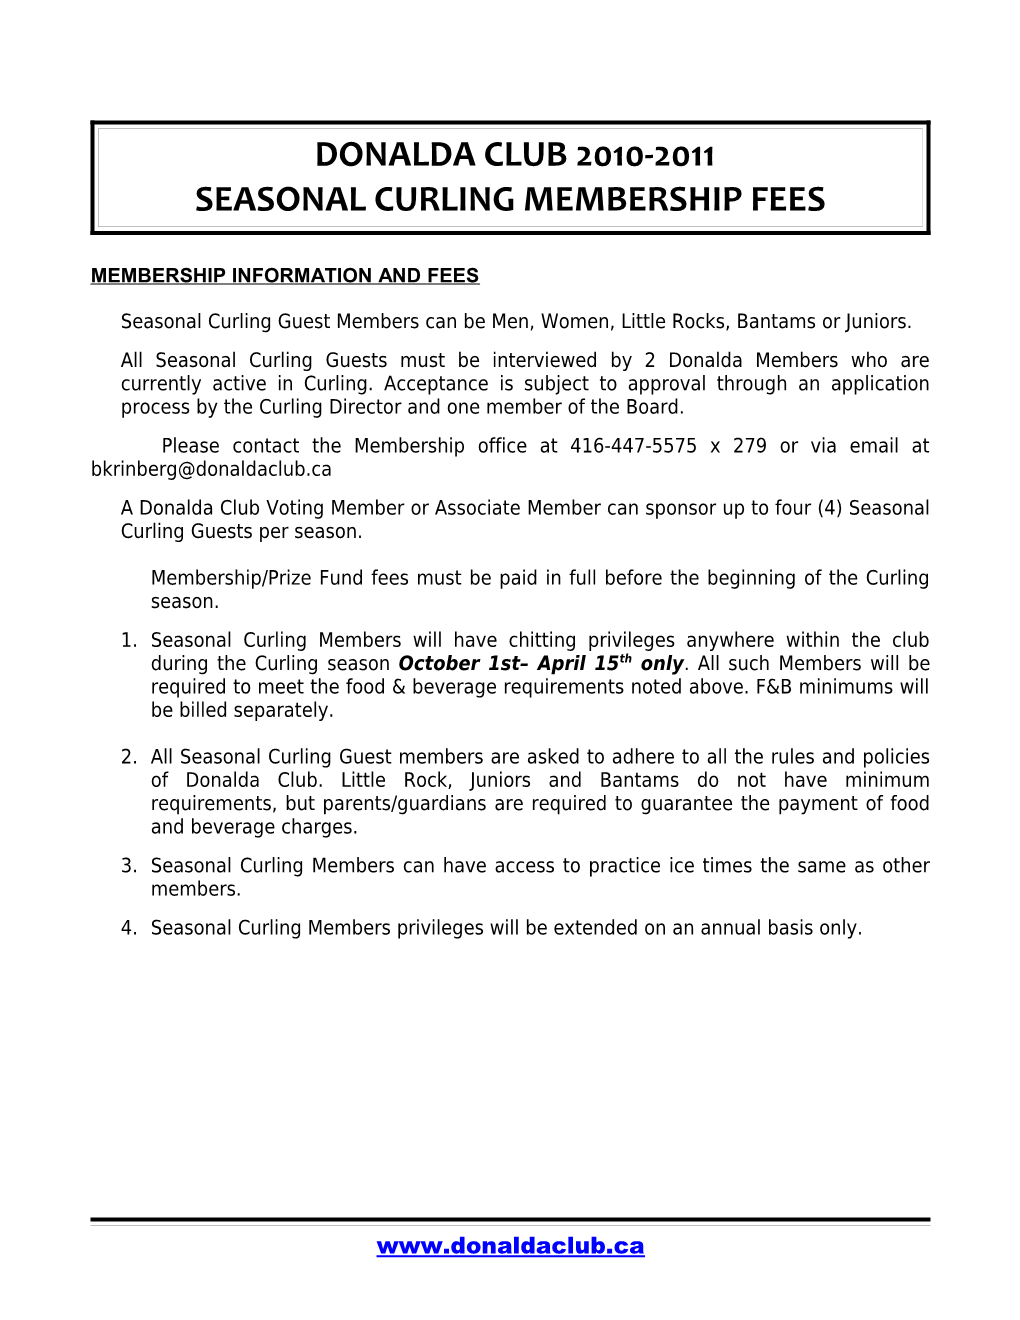 Seasonal Curling Membership Fees